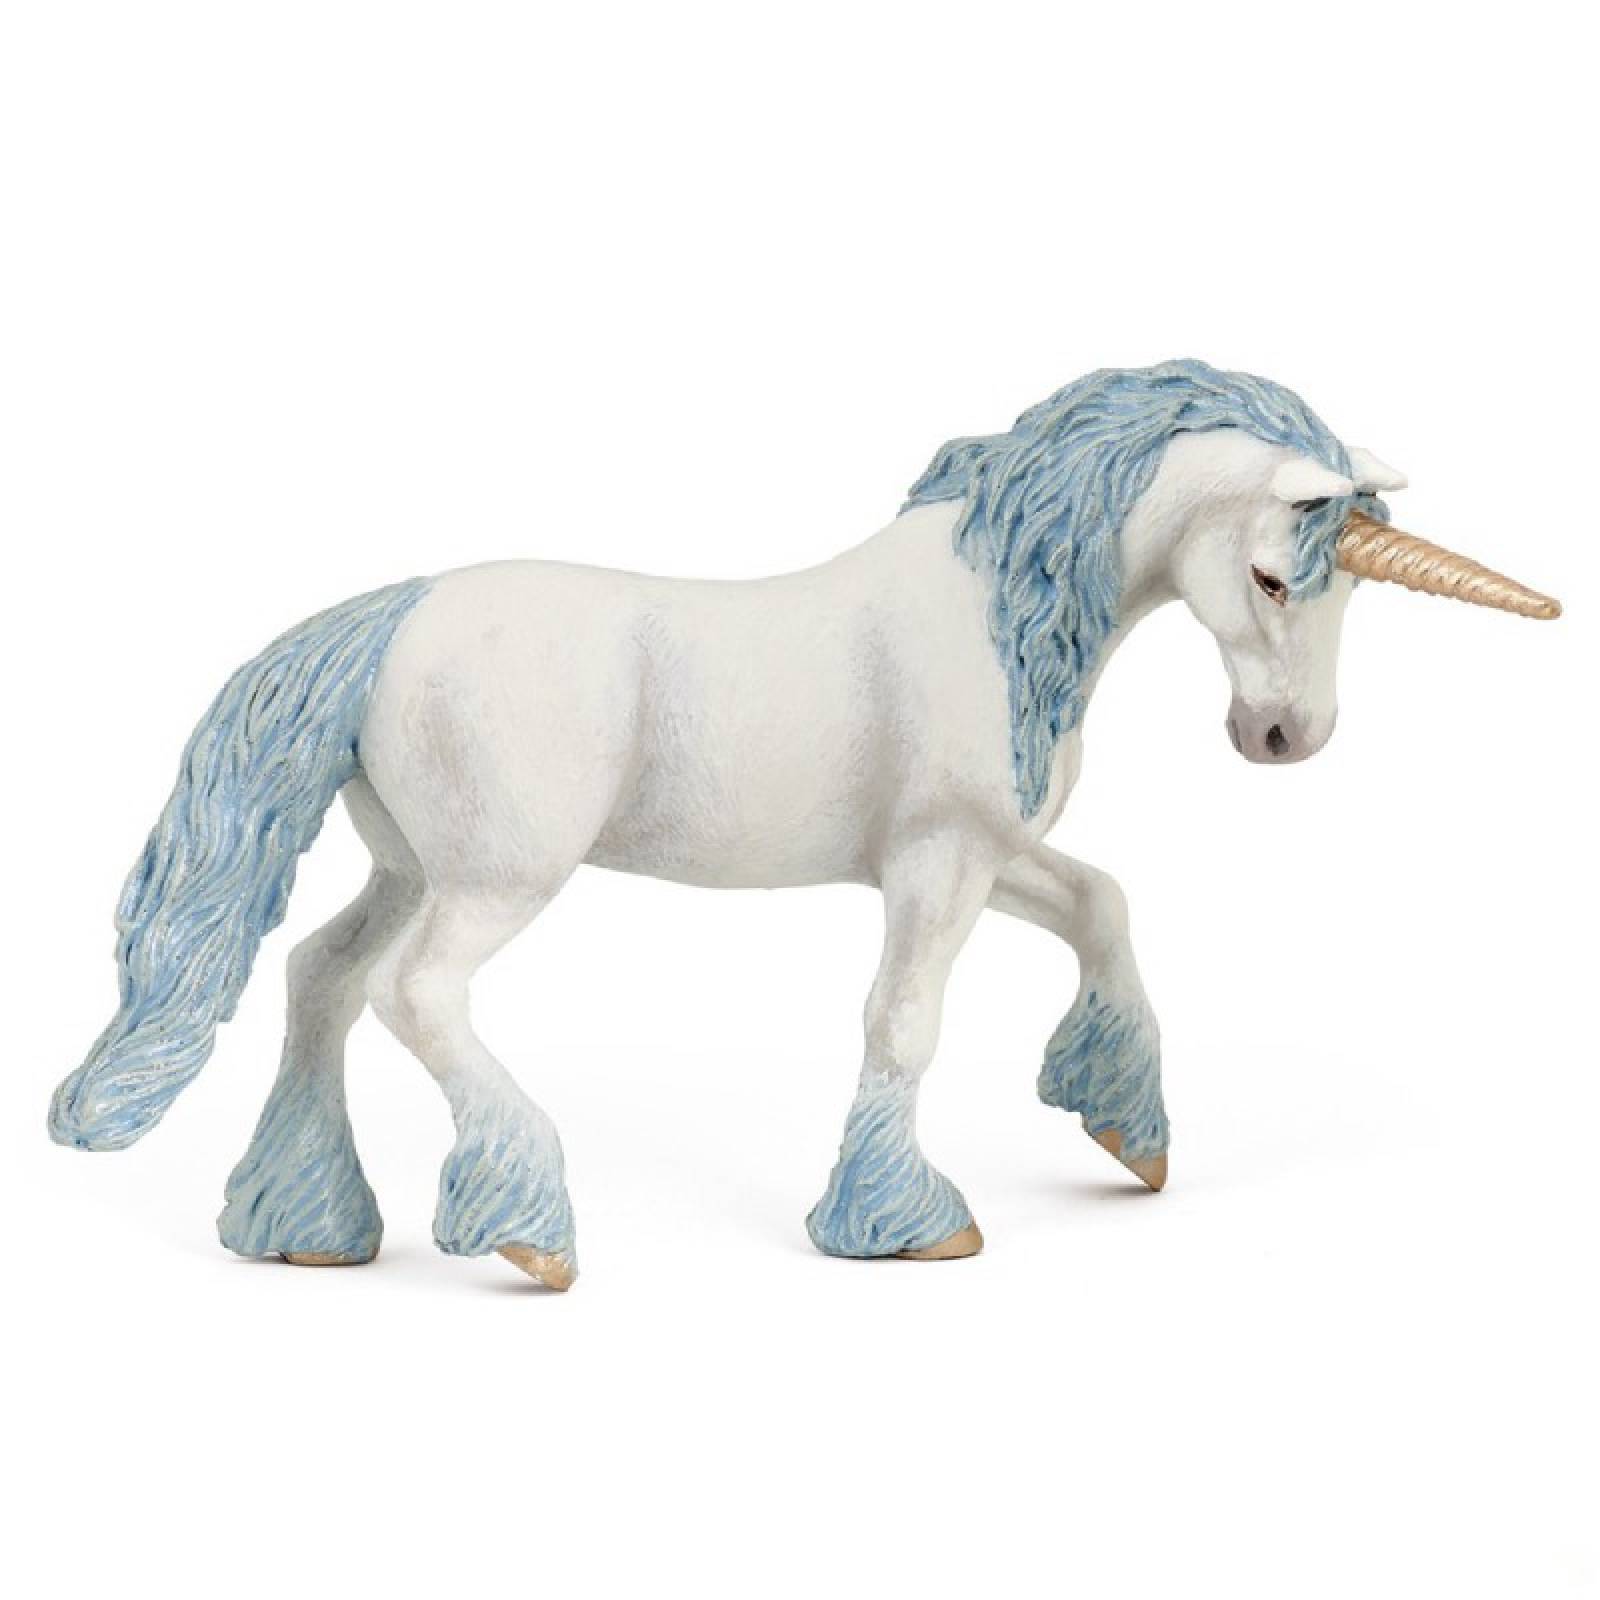 Magic Unicorn - Papo Fantasy Figure